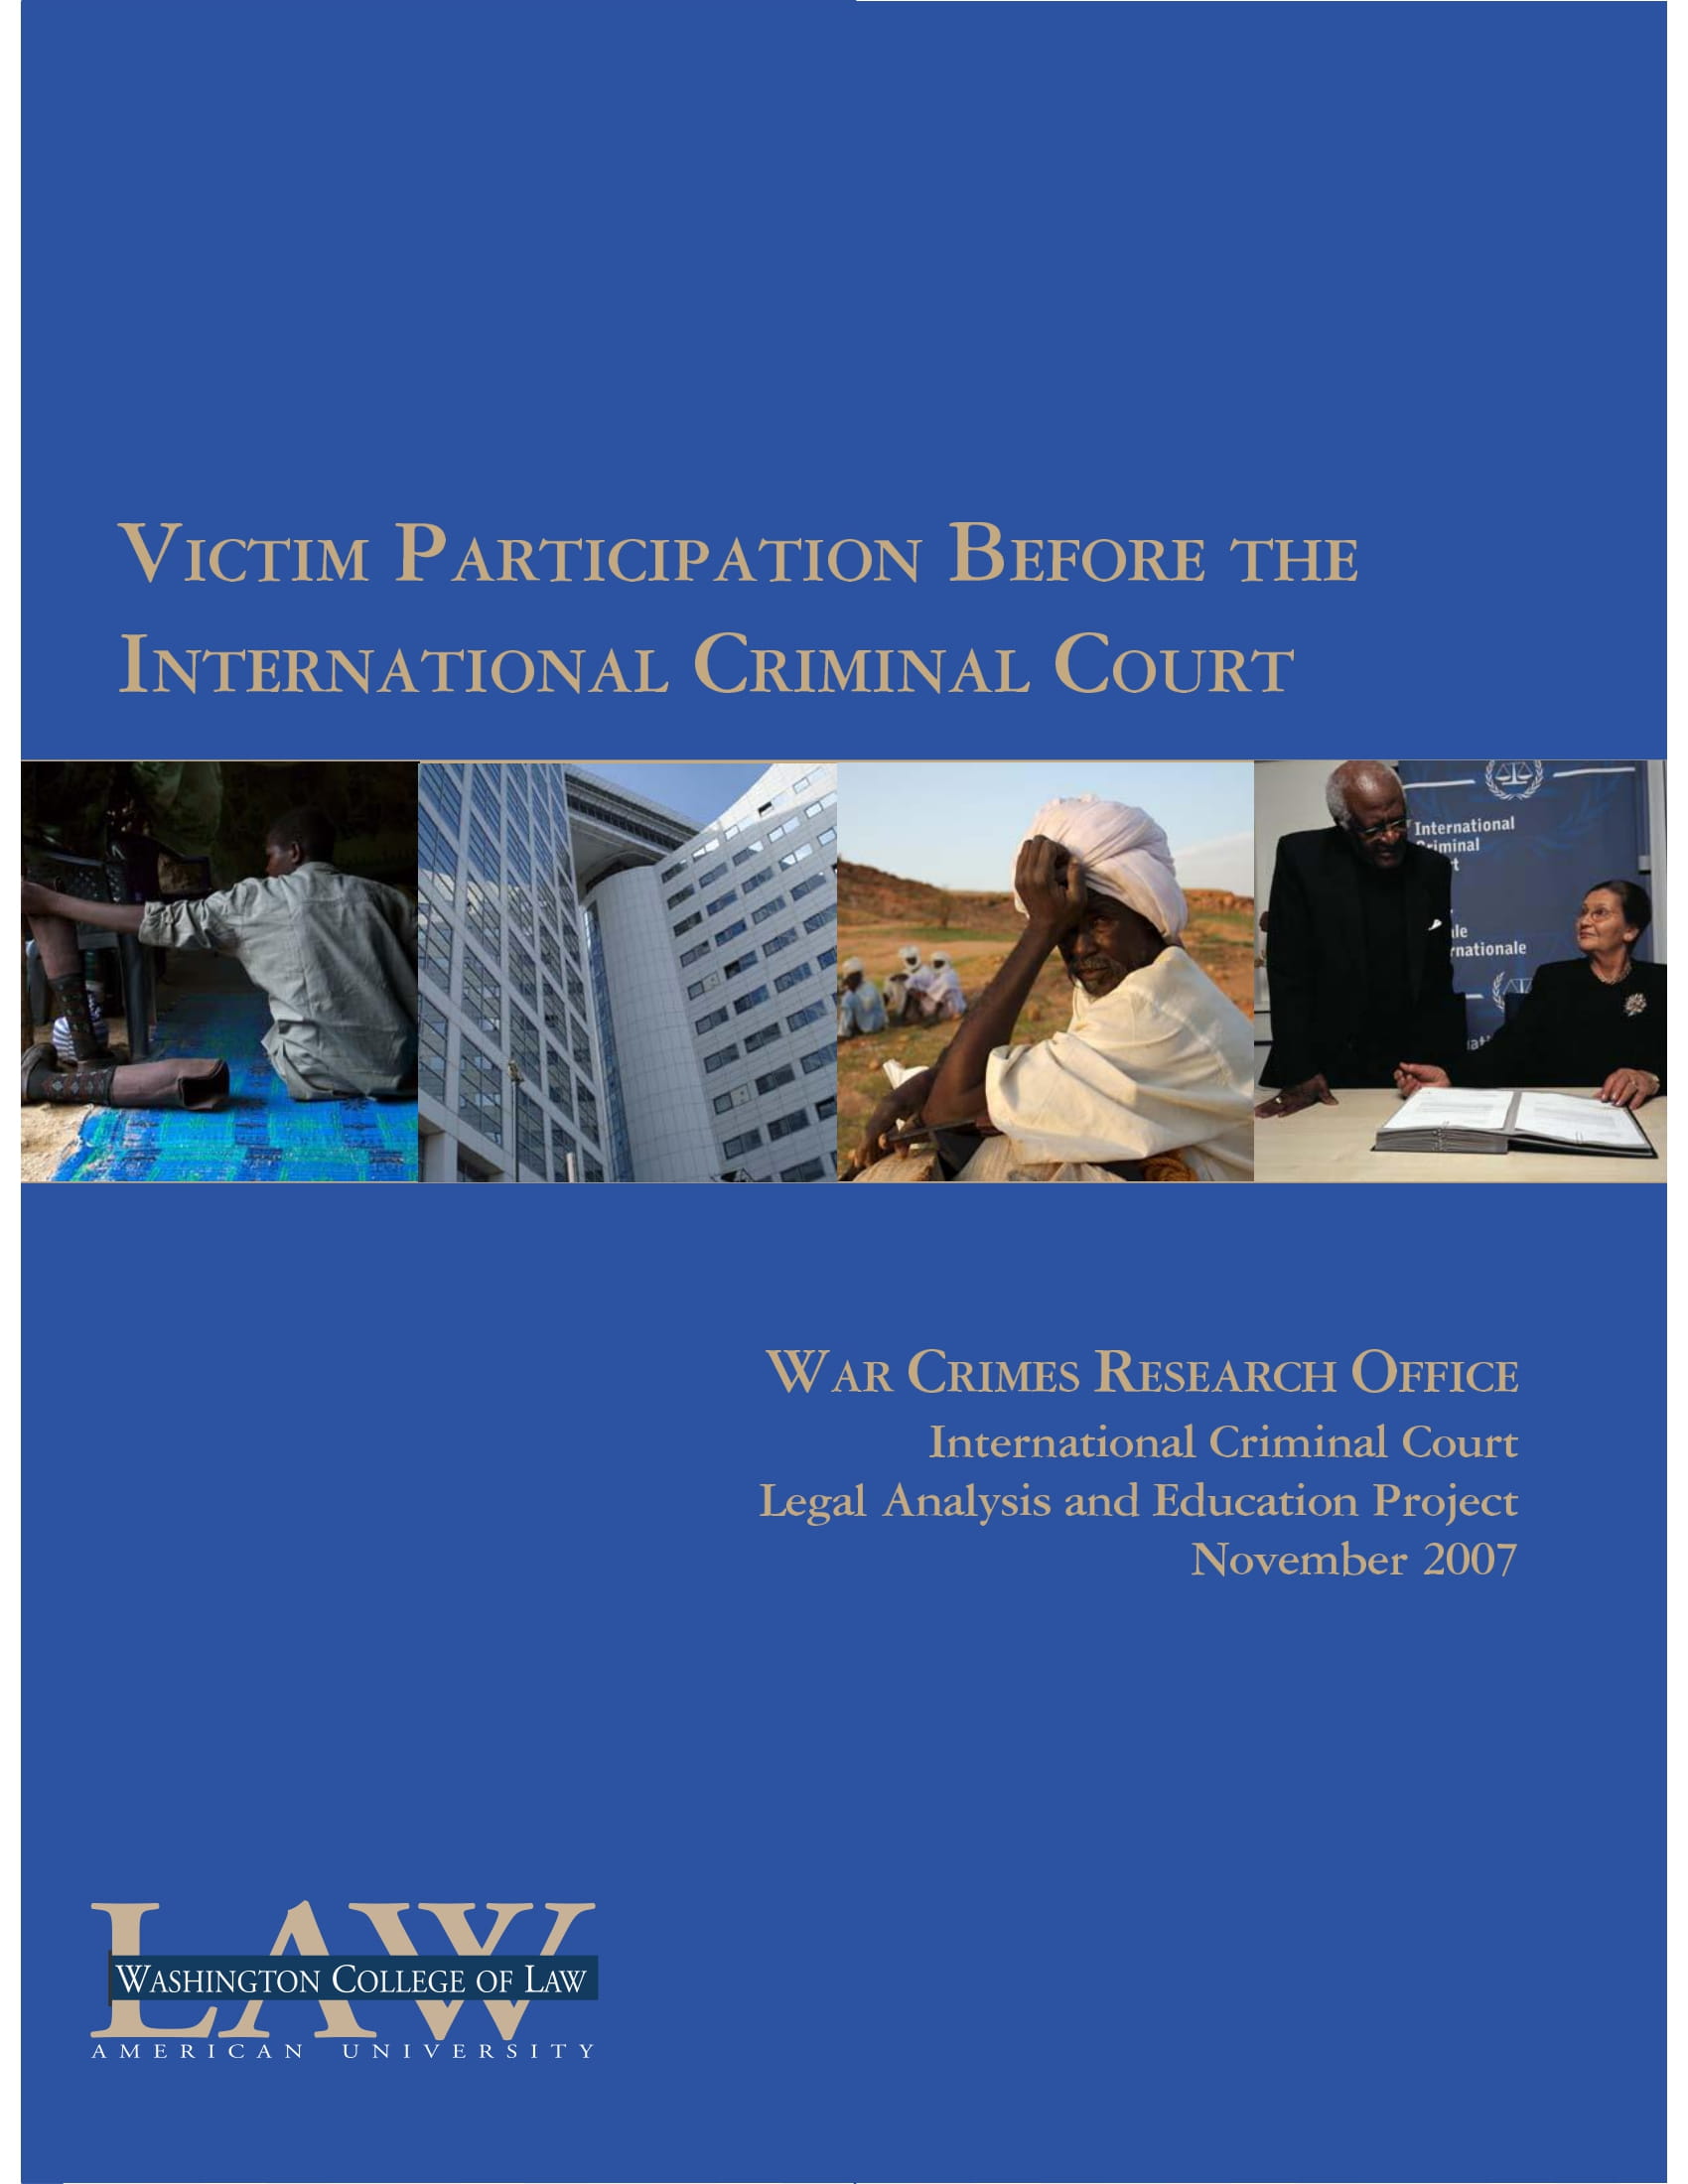 Report 1: Victim Participation Before the International Criminal Court